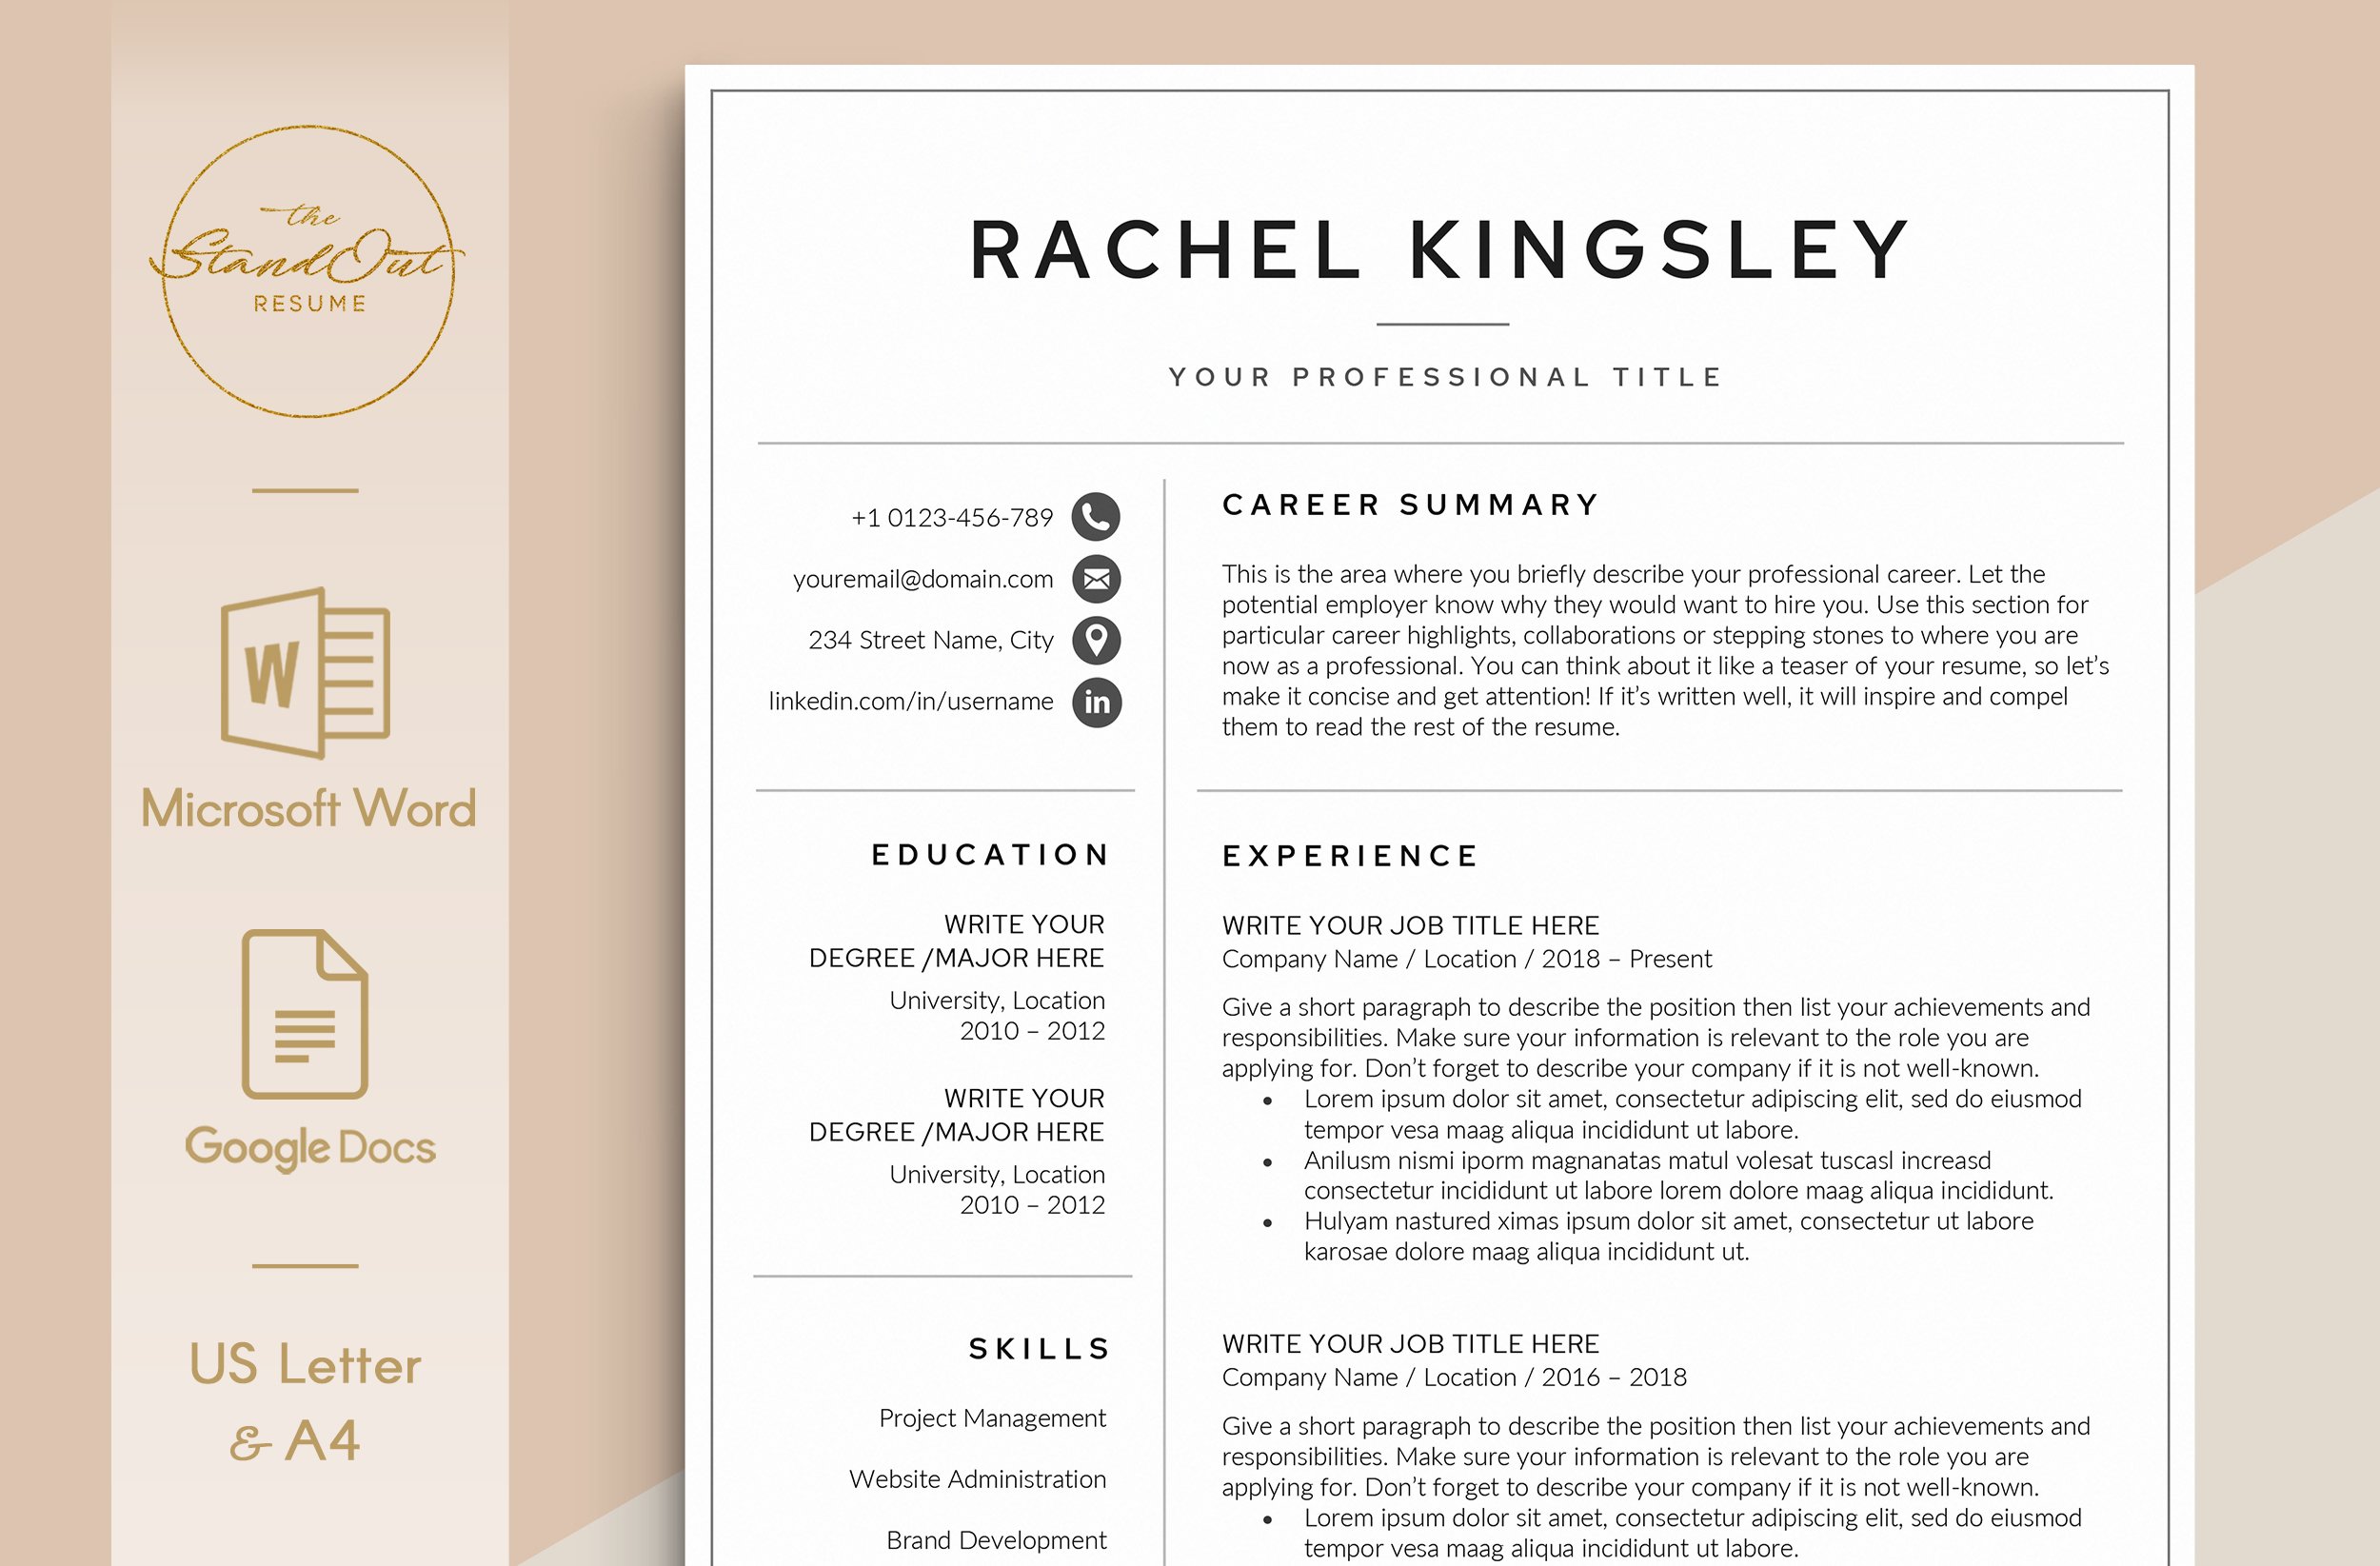 Resume/CV Template - RACHEL cover image.